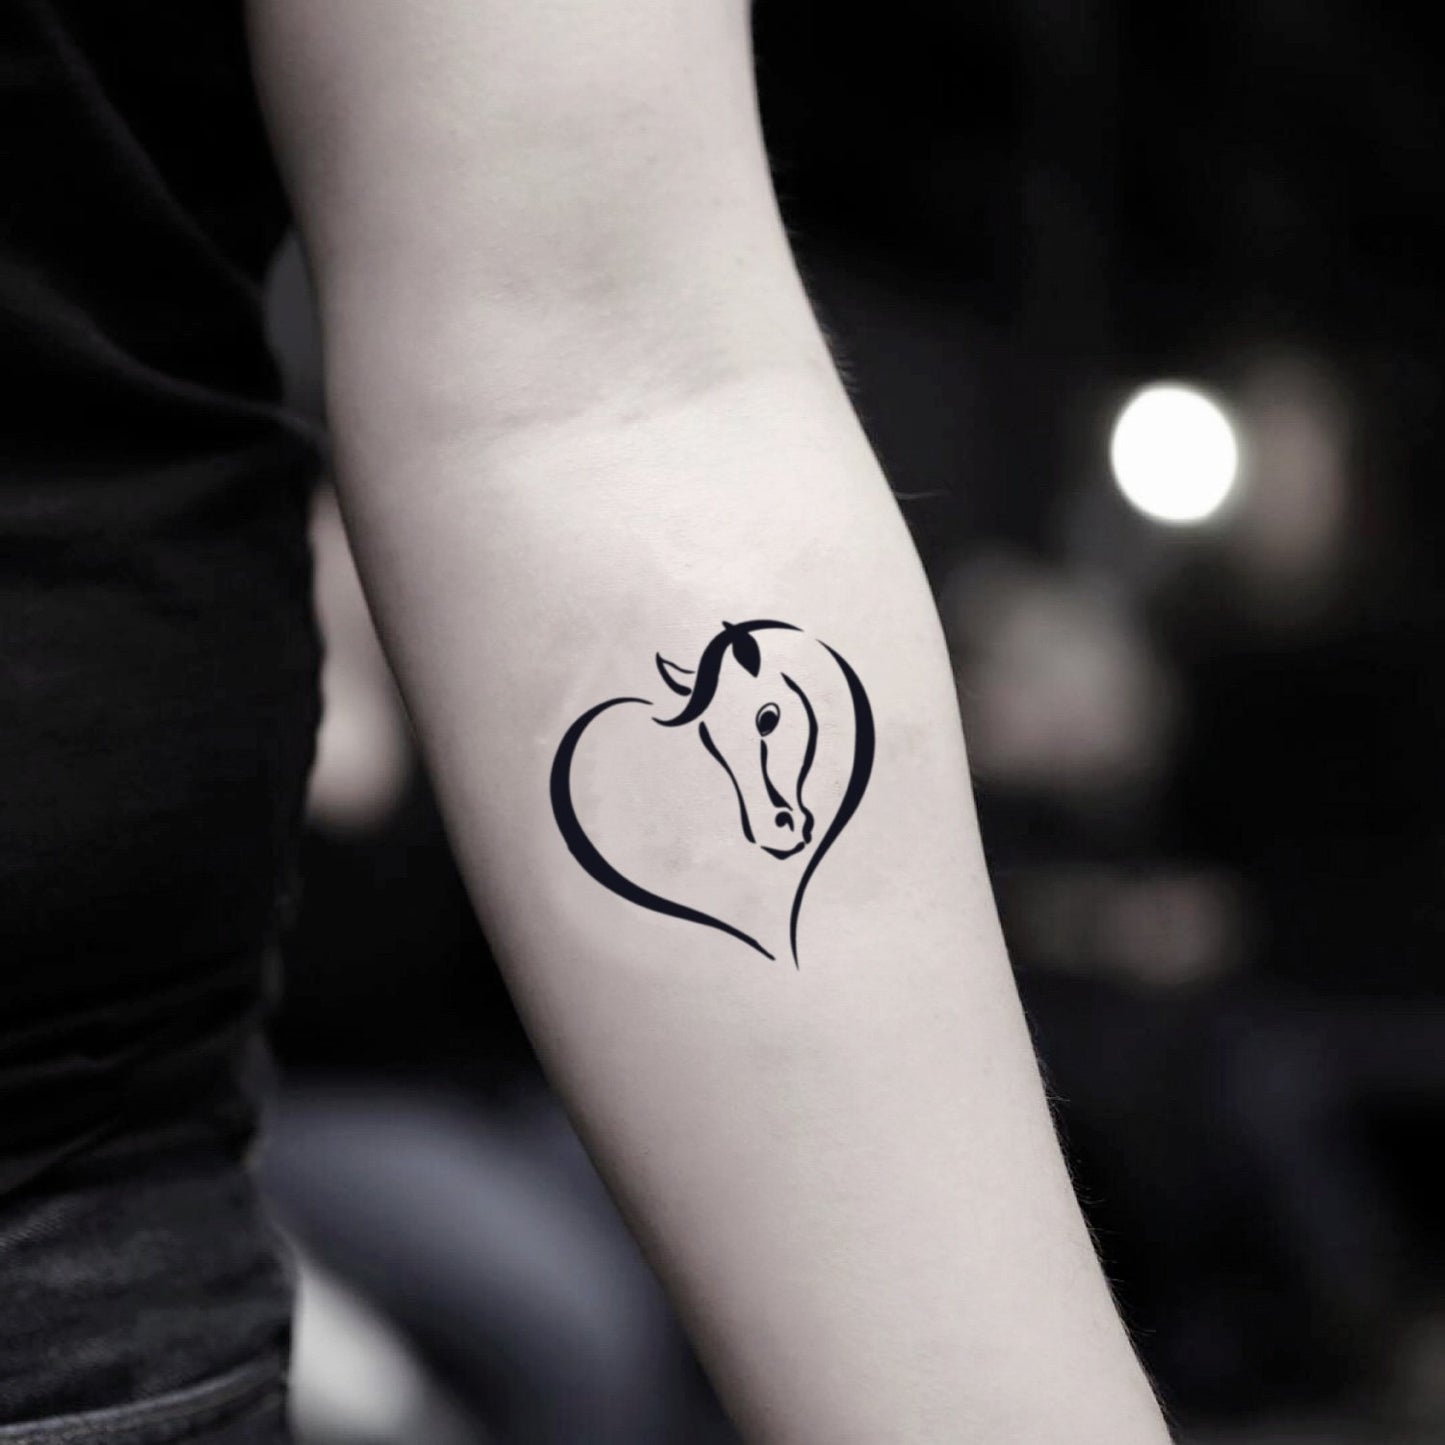 fake small dark horse heart animal temporary tattoo sticker design idea on inner arm